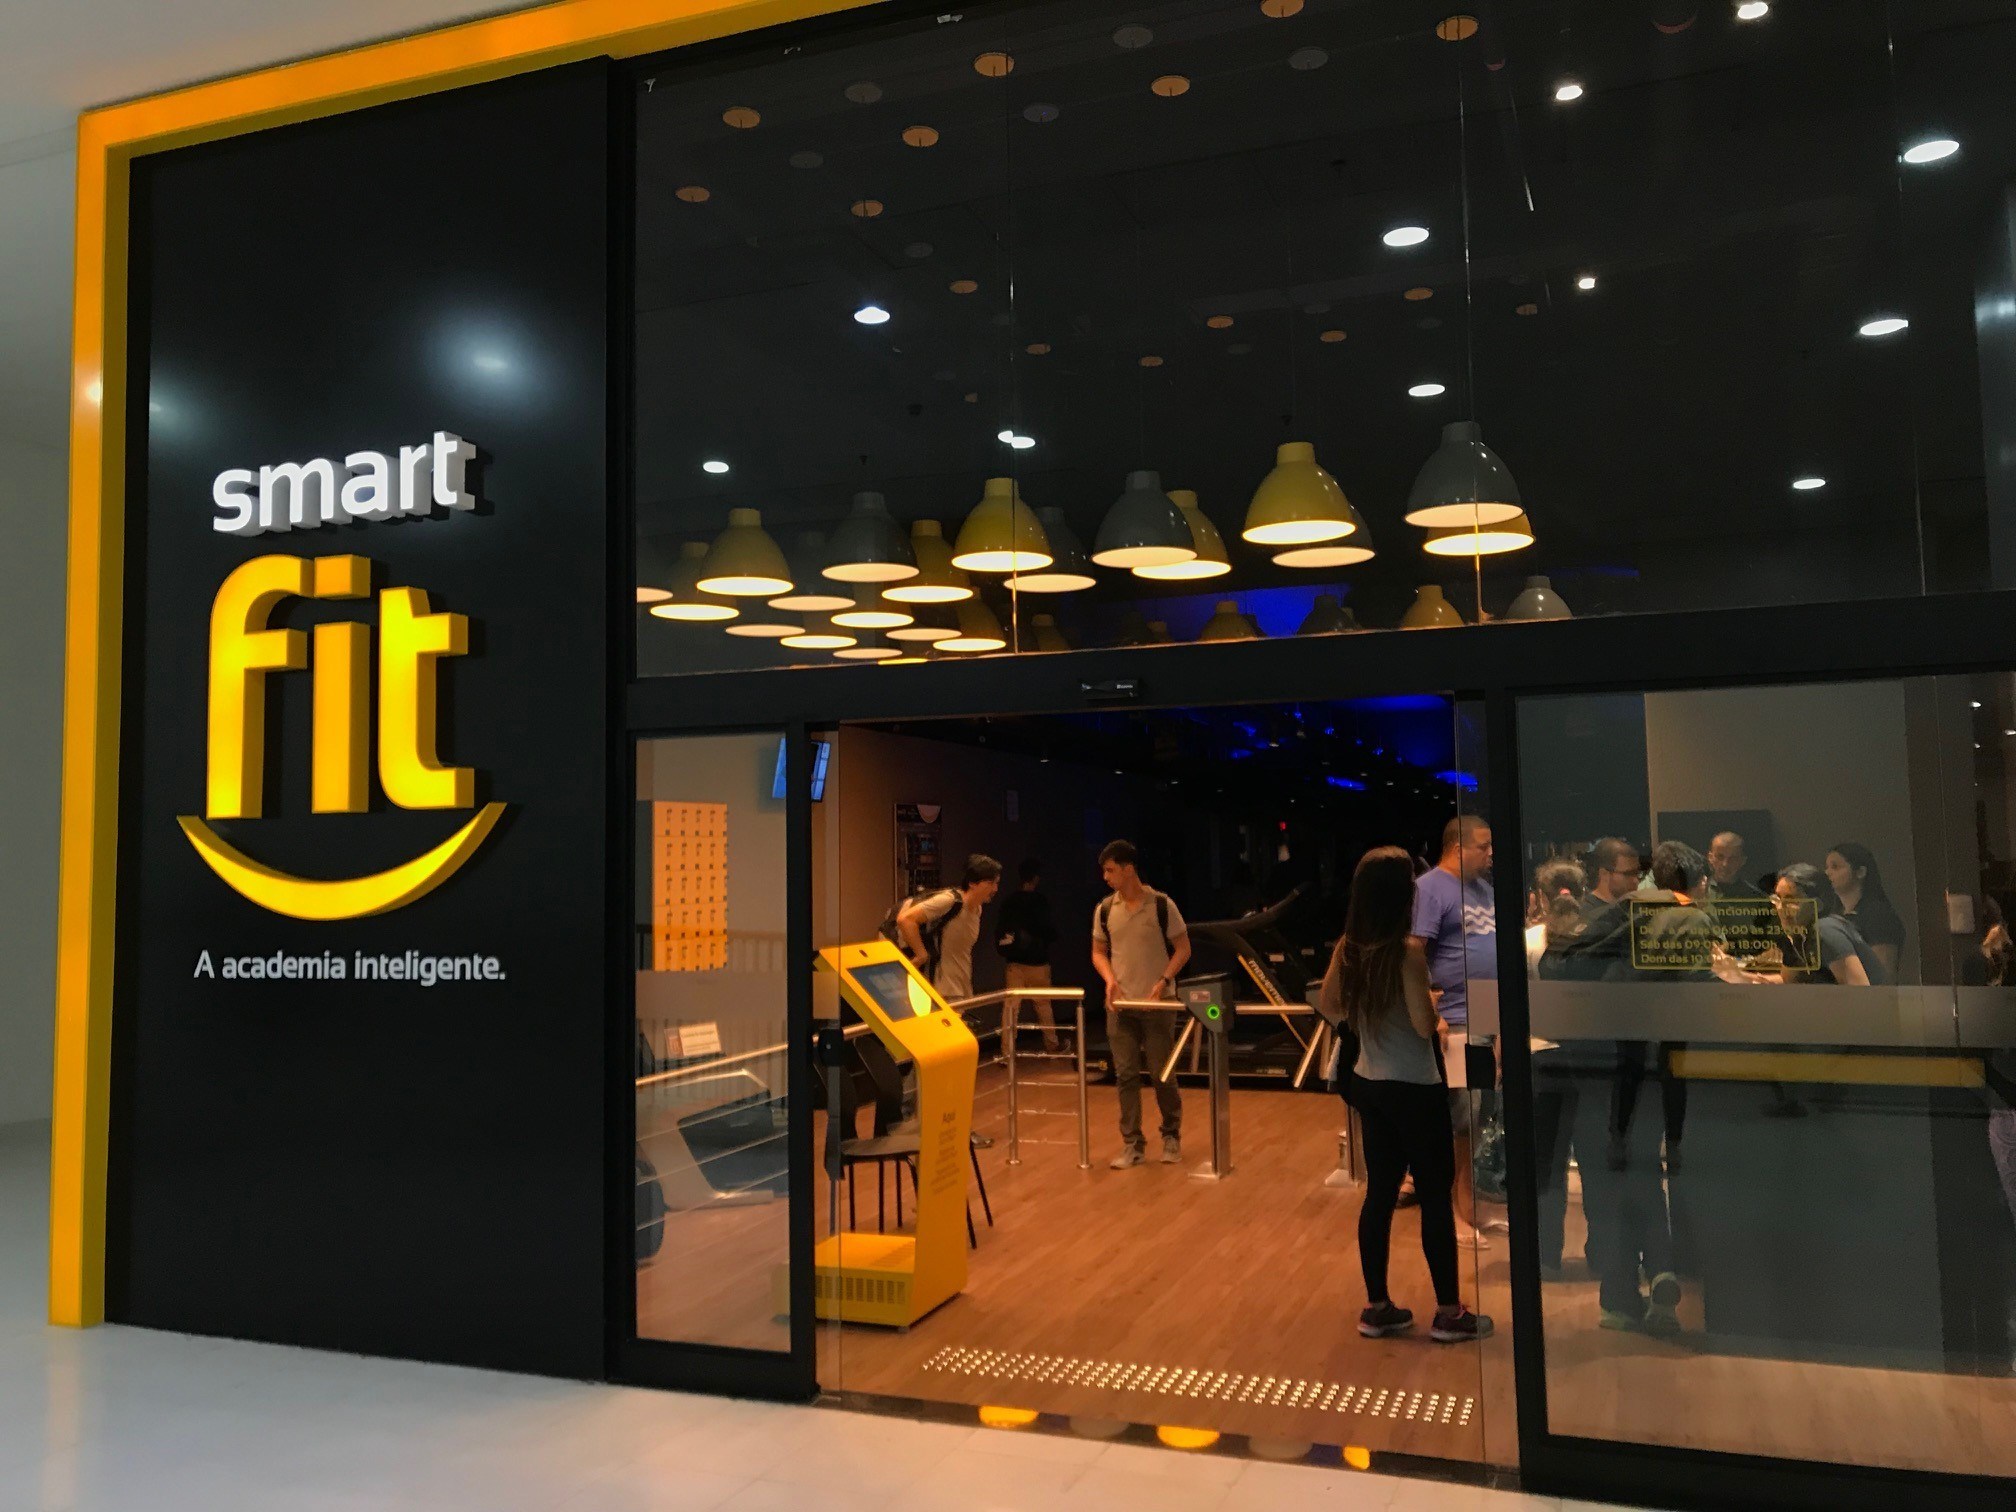 Smart Fit deve inaugurar unidade em Sinop no 2º semestre 17